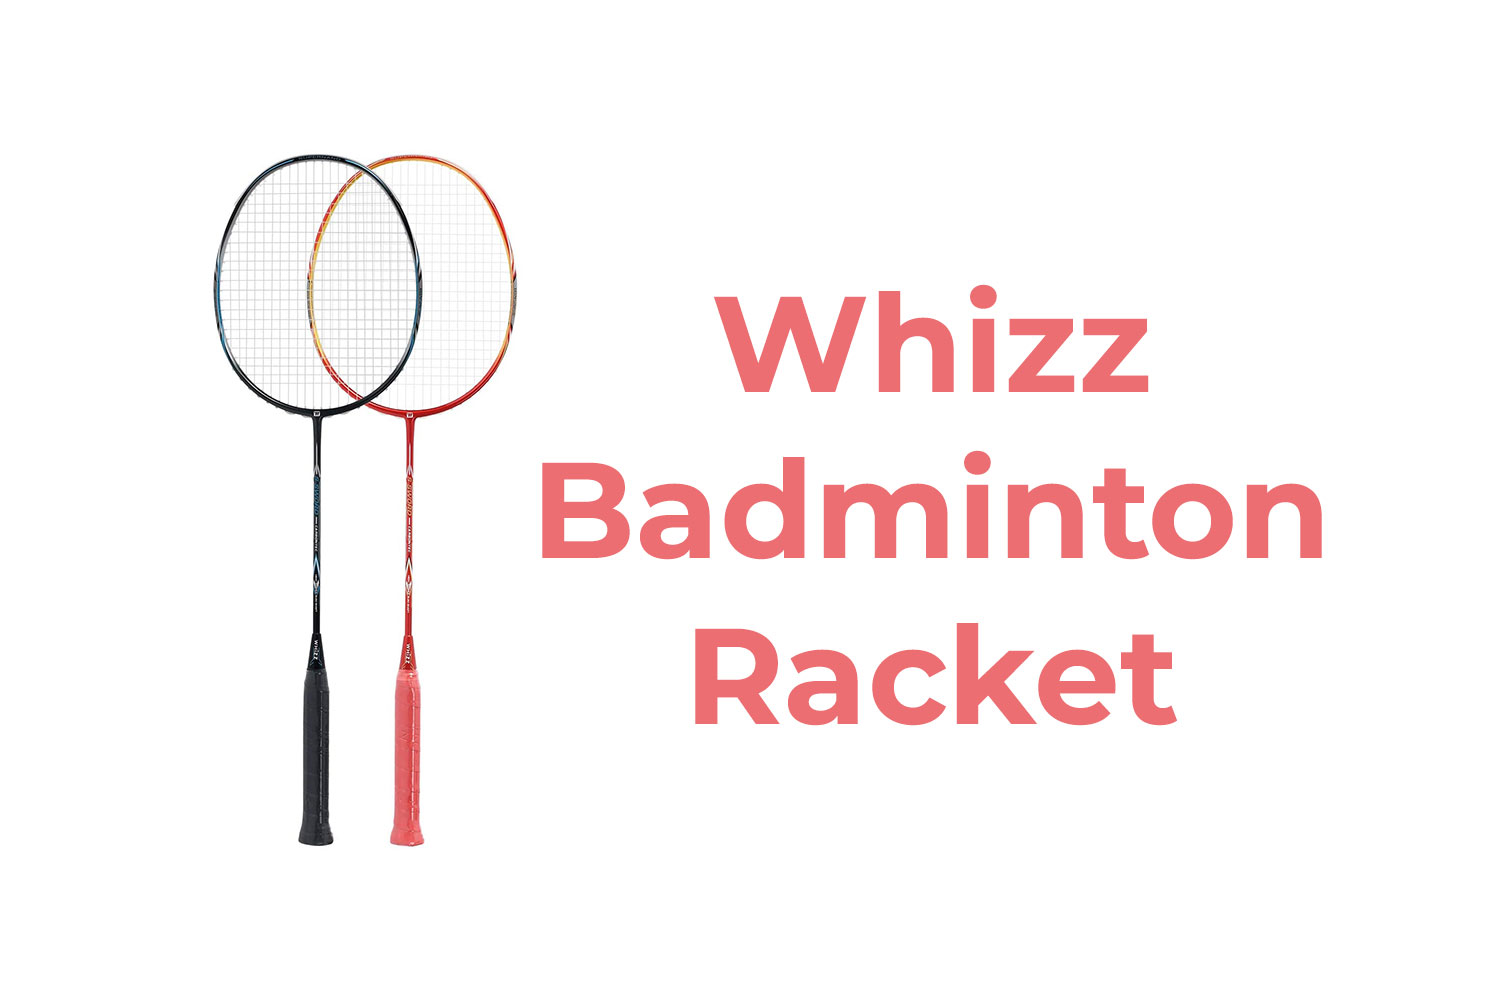 Whizz Badminton Racket